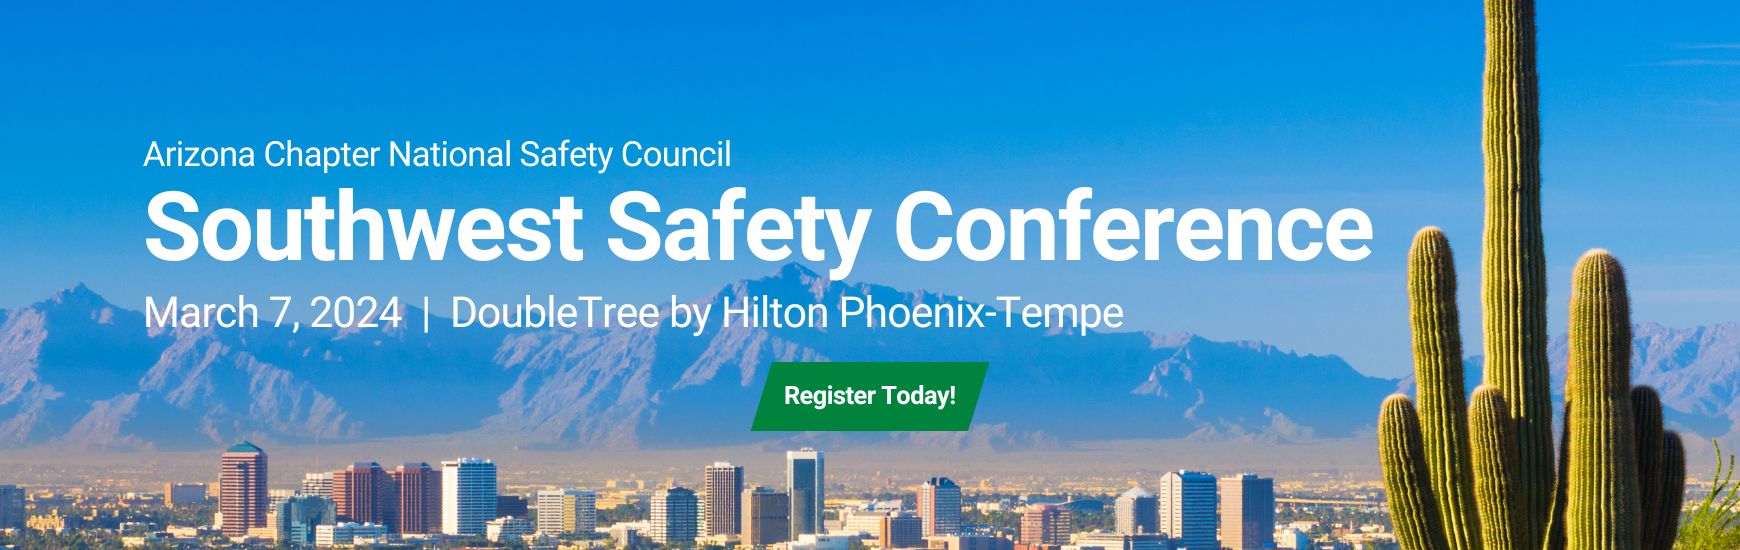 Southwest Safety Conference